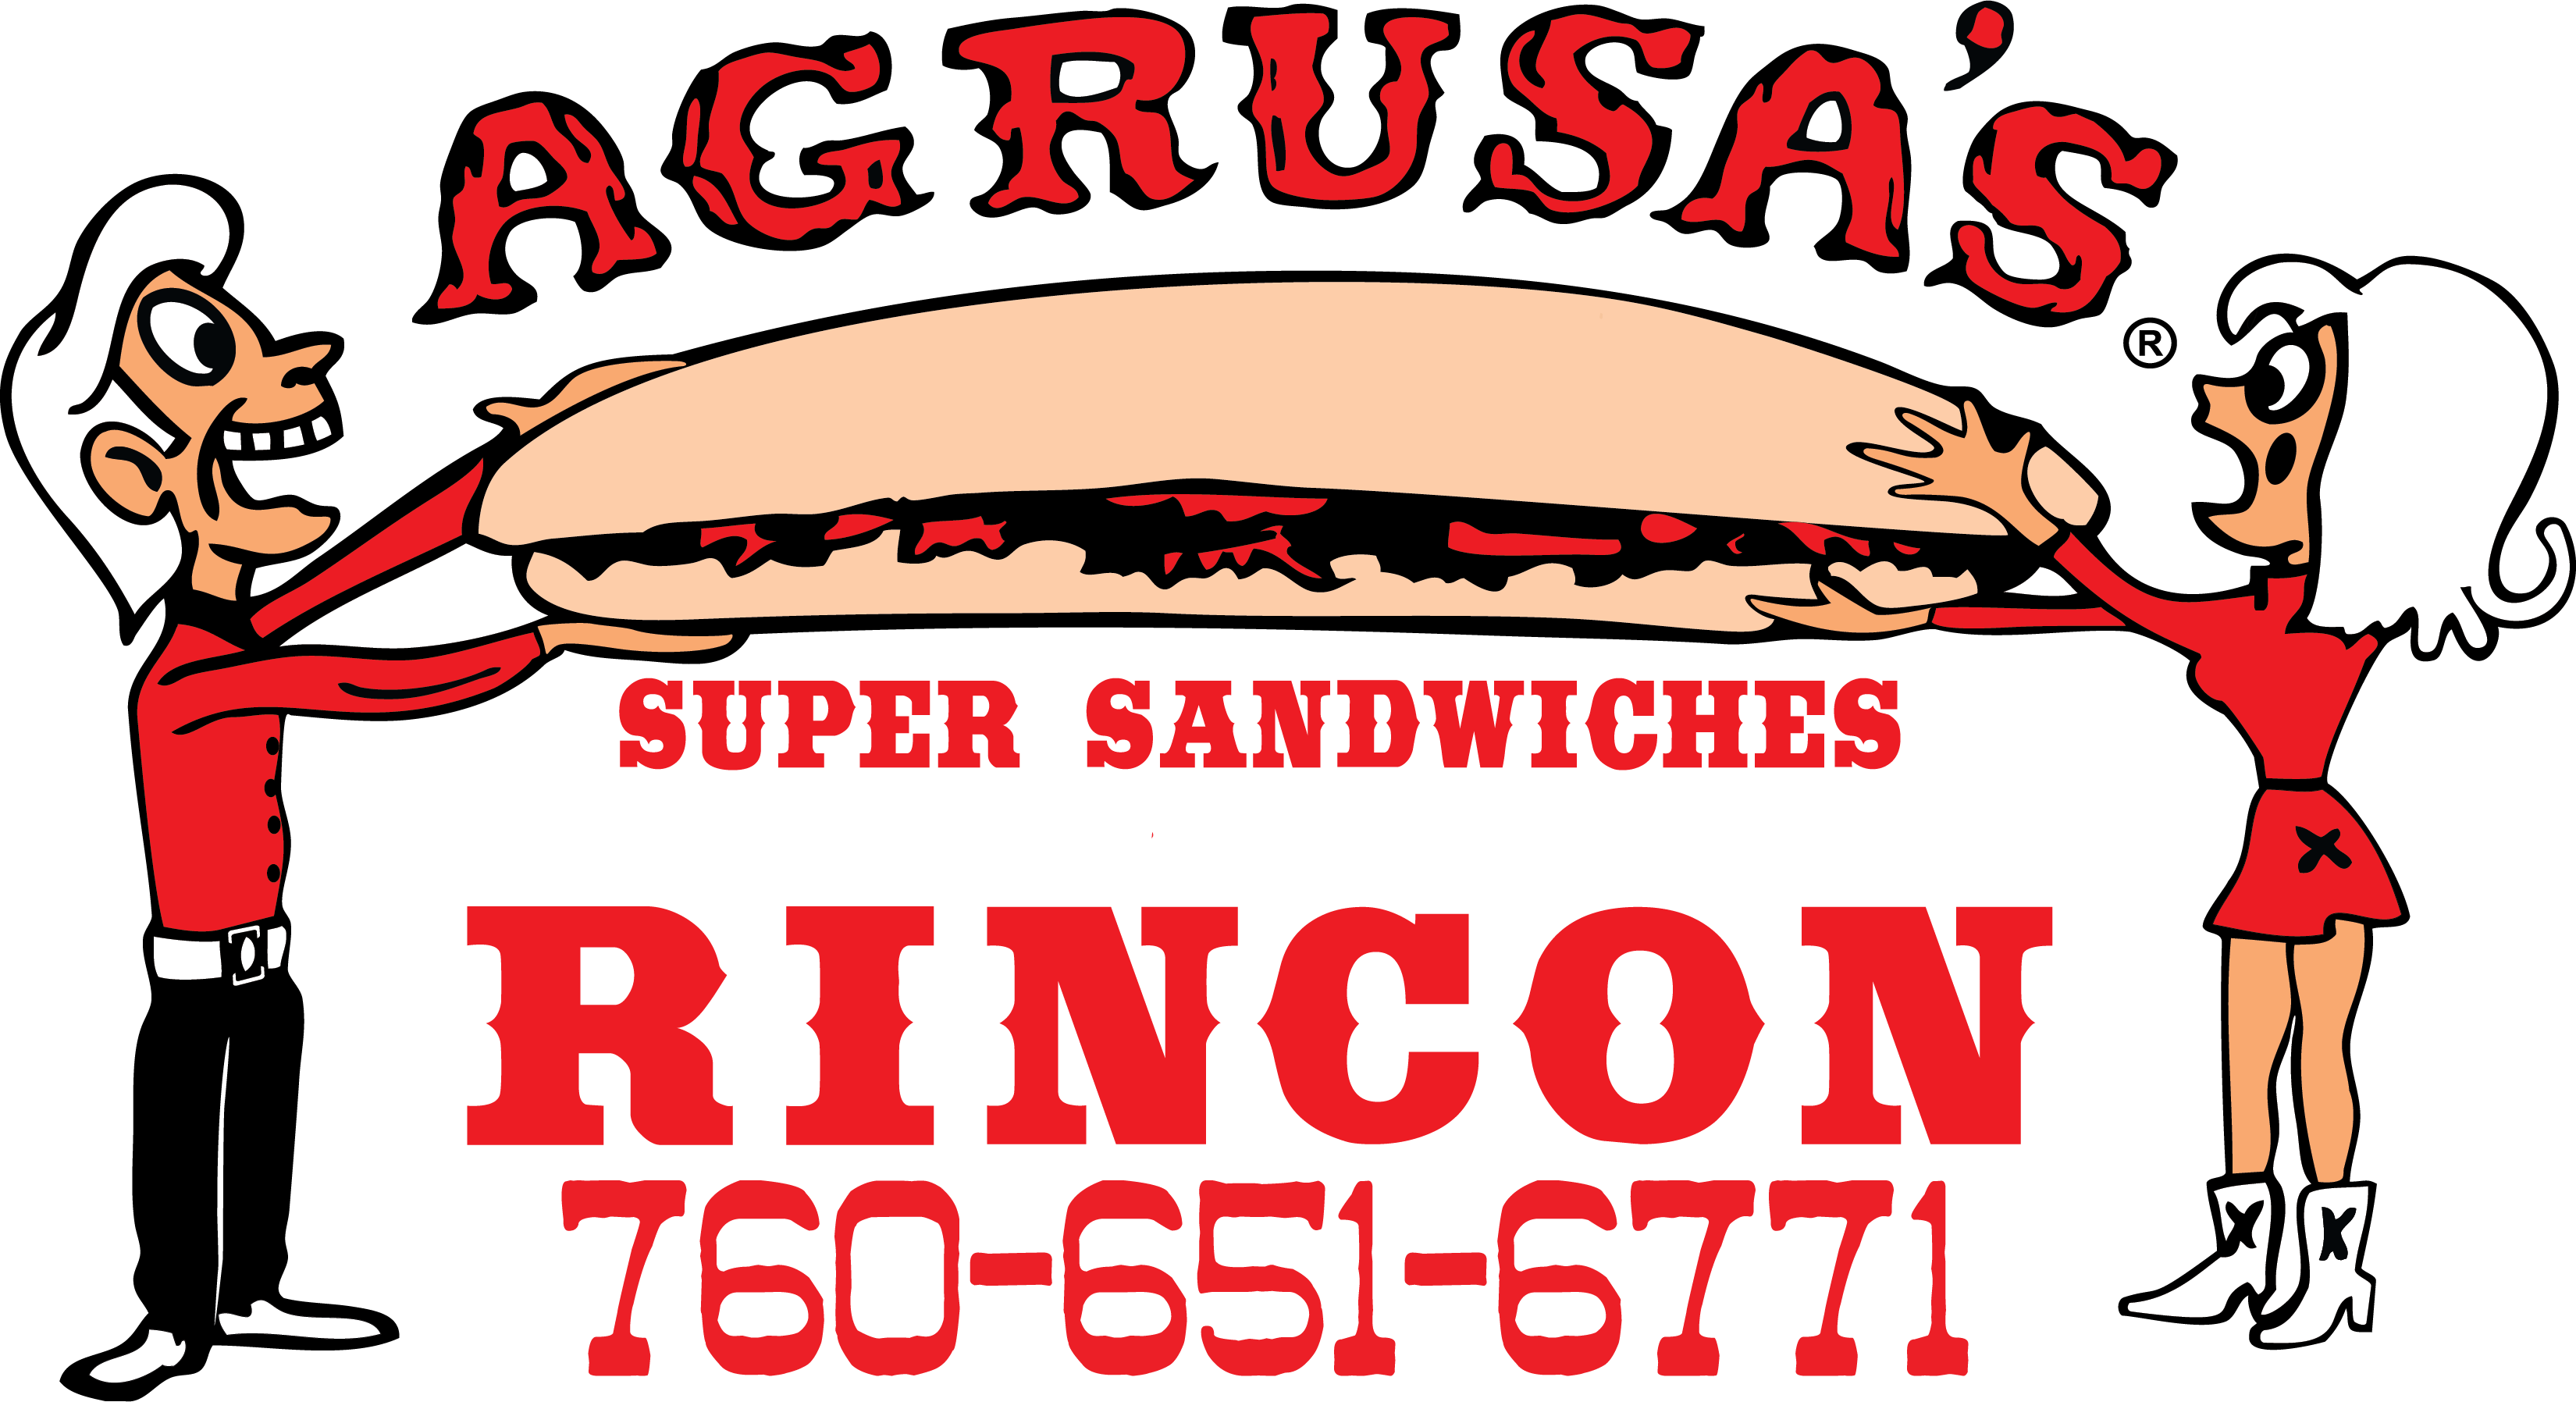 Agrusa's Super Sandwiches Rincon Logo - Phone Number: 760-651-6771